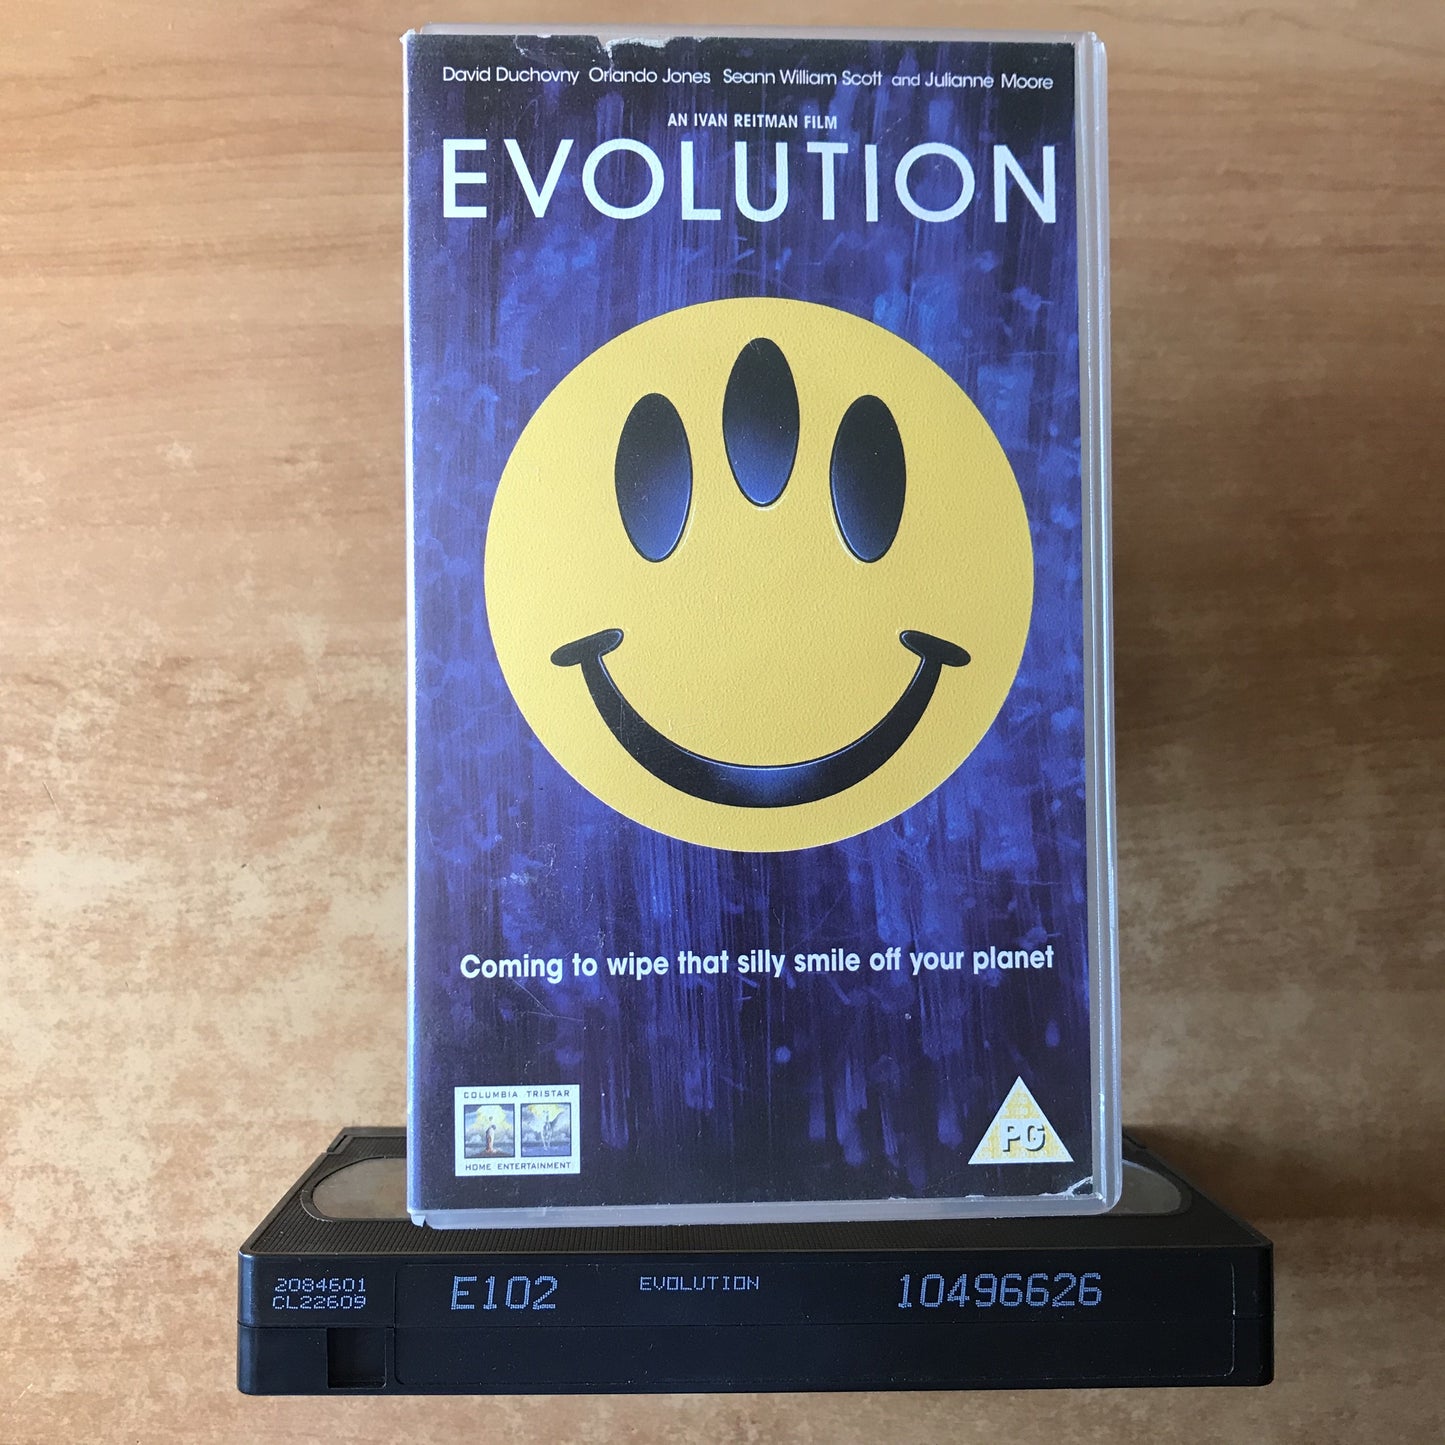 Evolution: Star Studded - Sci-Fi Comedy - Sean William Scott - Duchovny - VHS-